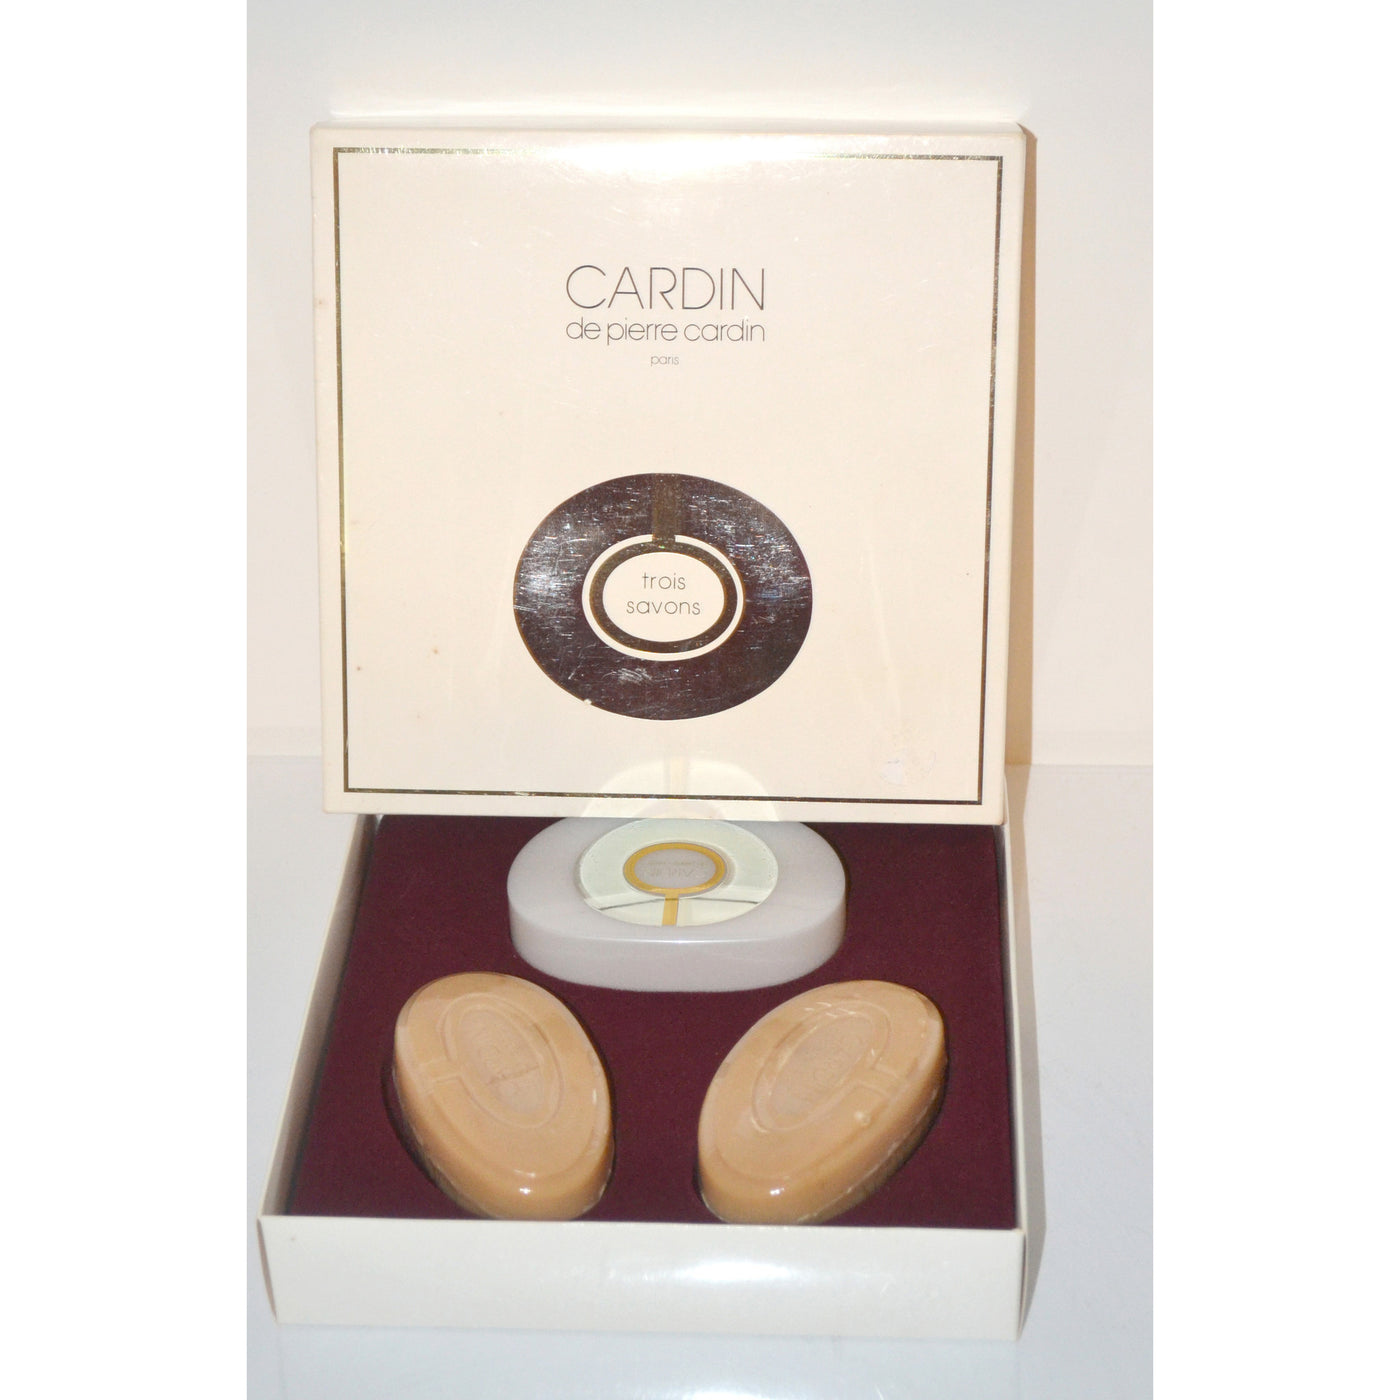 Vintage Cardin Trois Savons By Pierre Cardin